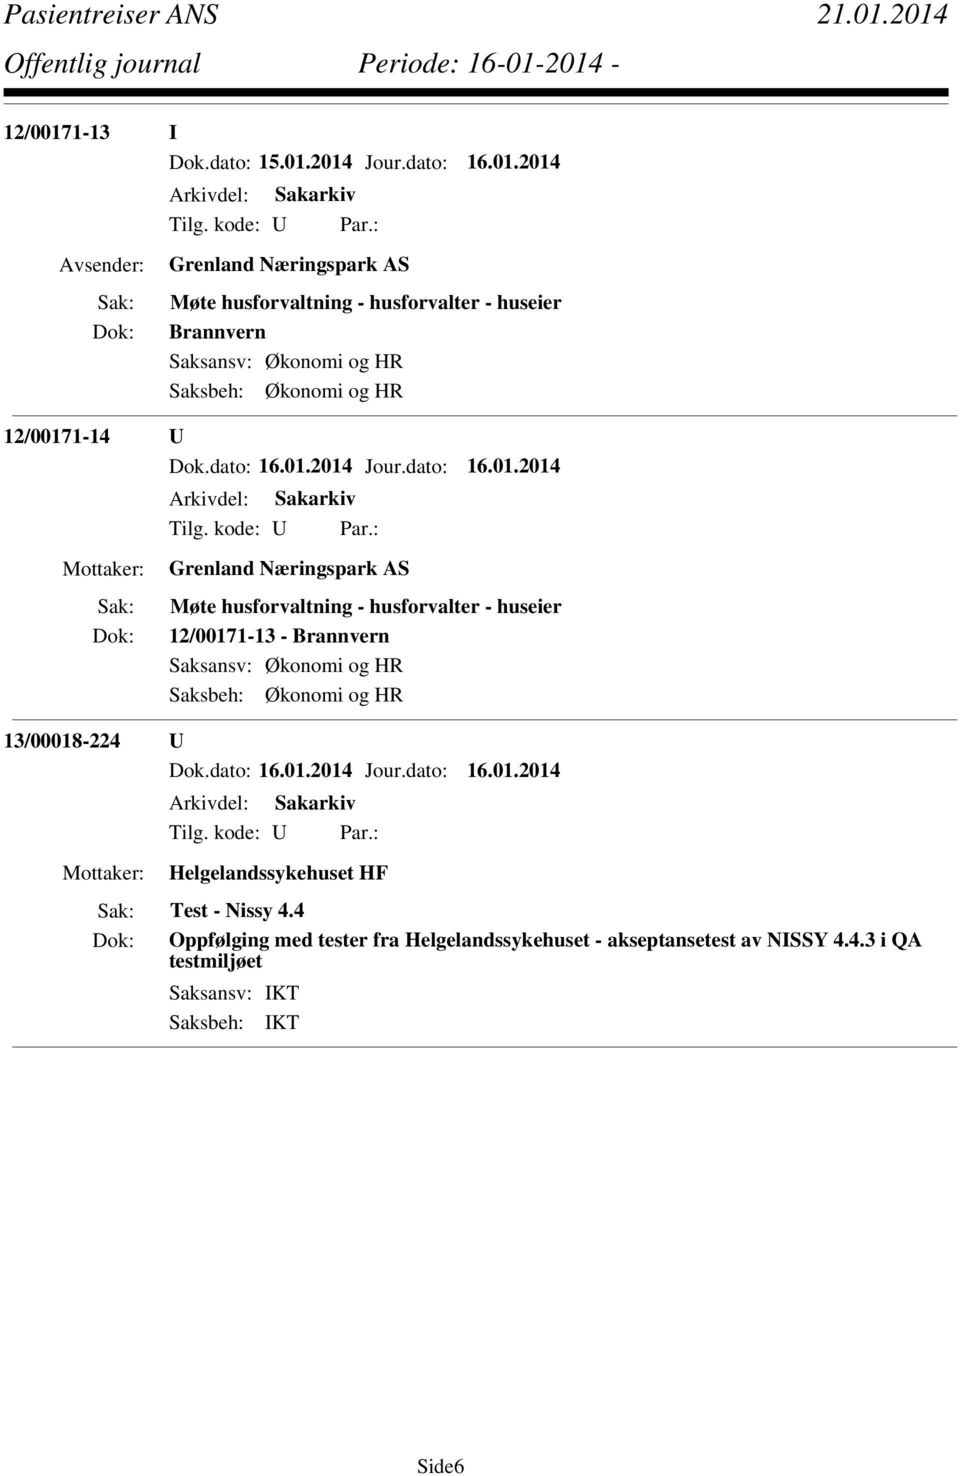 12/00171-13 - Brannvern Saksbeh: Økonomi og HR 13/00018-224 U Helgelandssykehuset HF Test - Nissy 4.